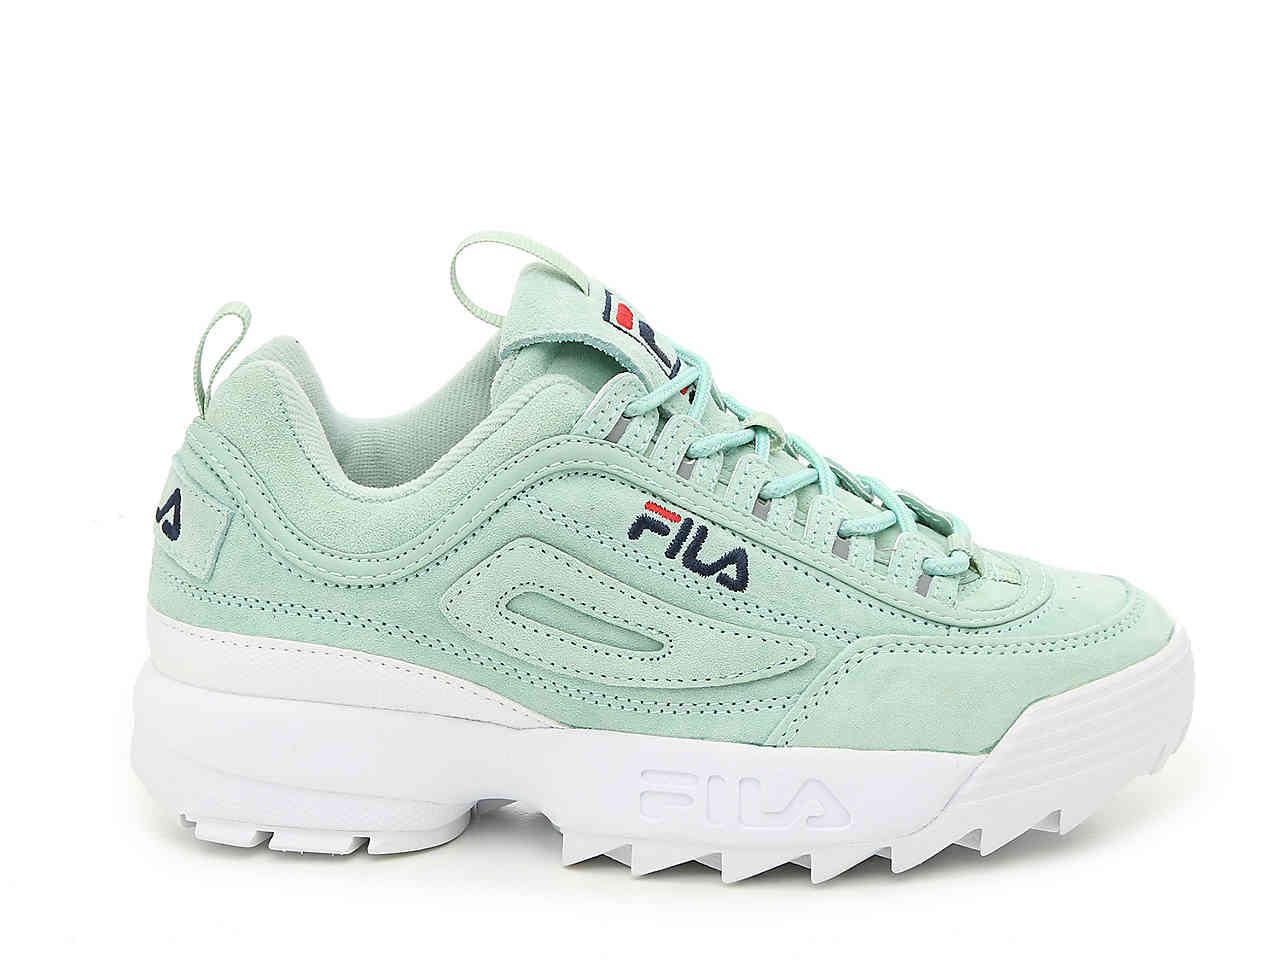 Fila Suede Disruptor Ii Premium Sneaker in Mint Green (Green) | Lyst